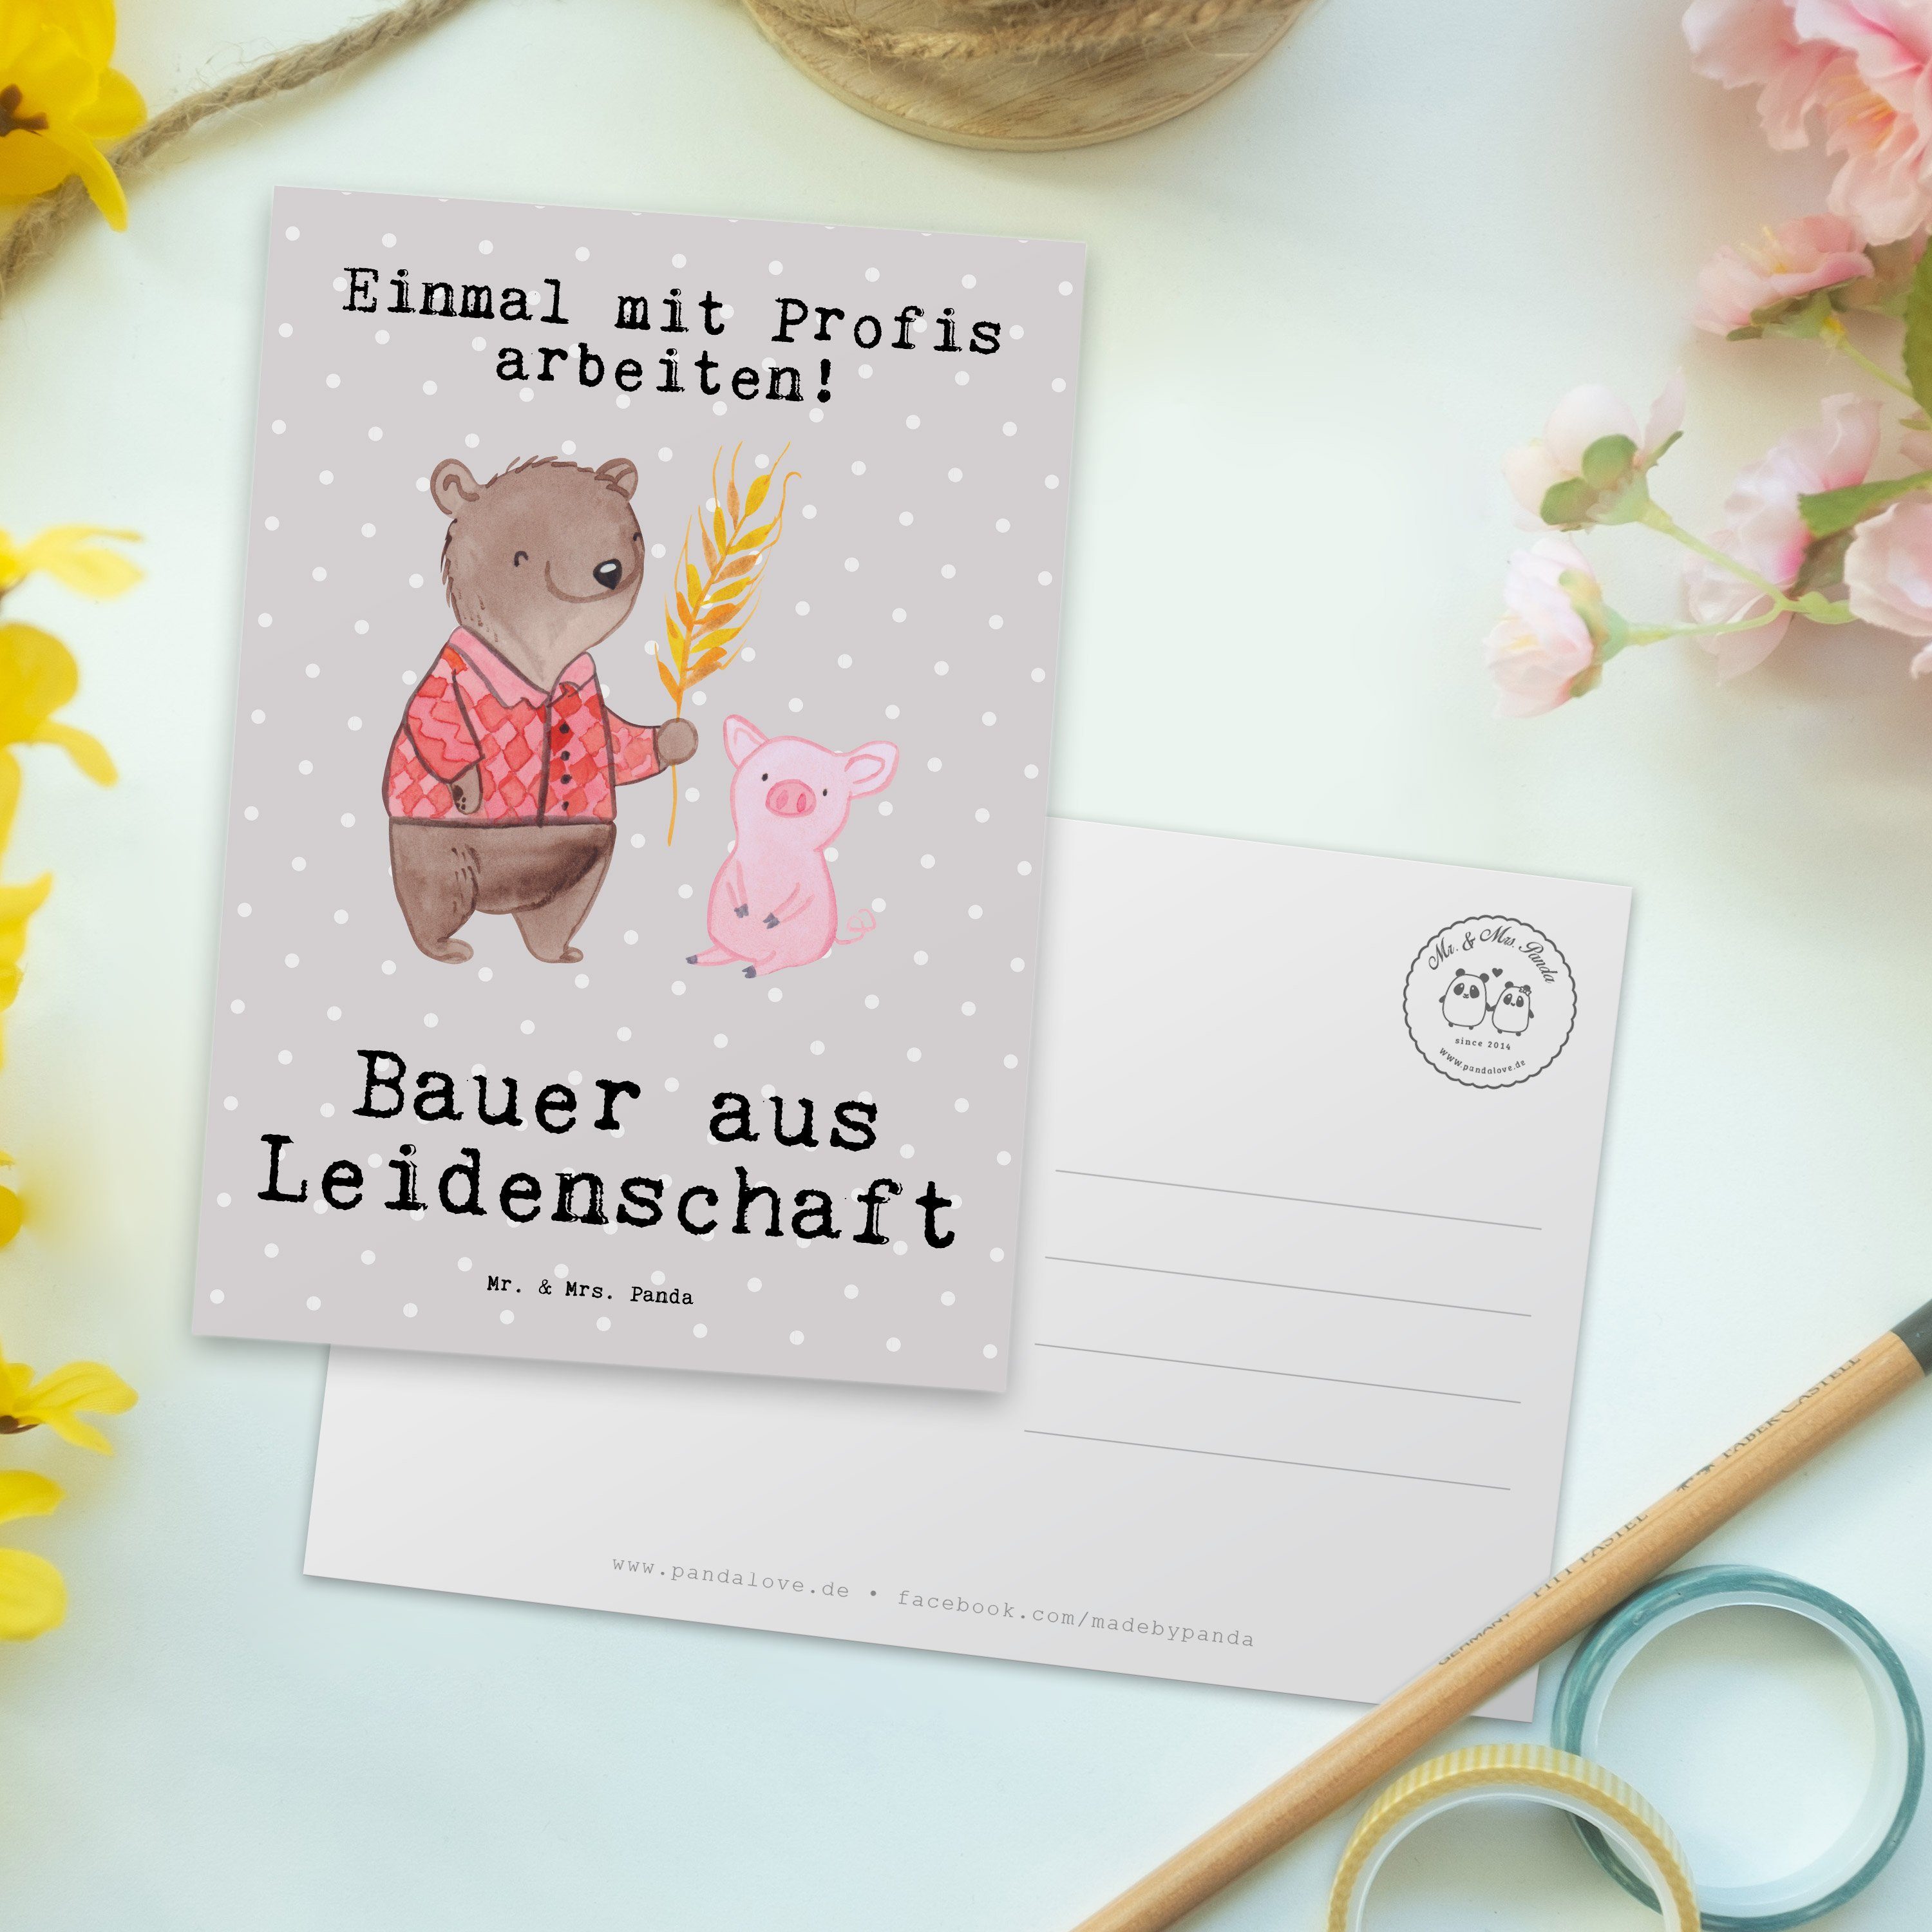 Abschie aus - Dankeschön, Mrs. Bauer Leidenschaft Pastell Panda - Postkarte Grau Geschenk, & Mr.